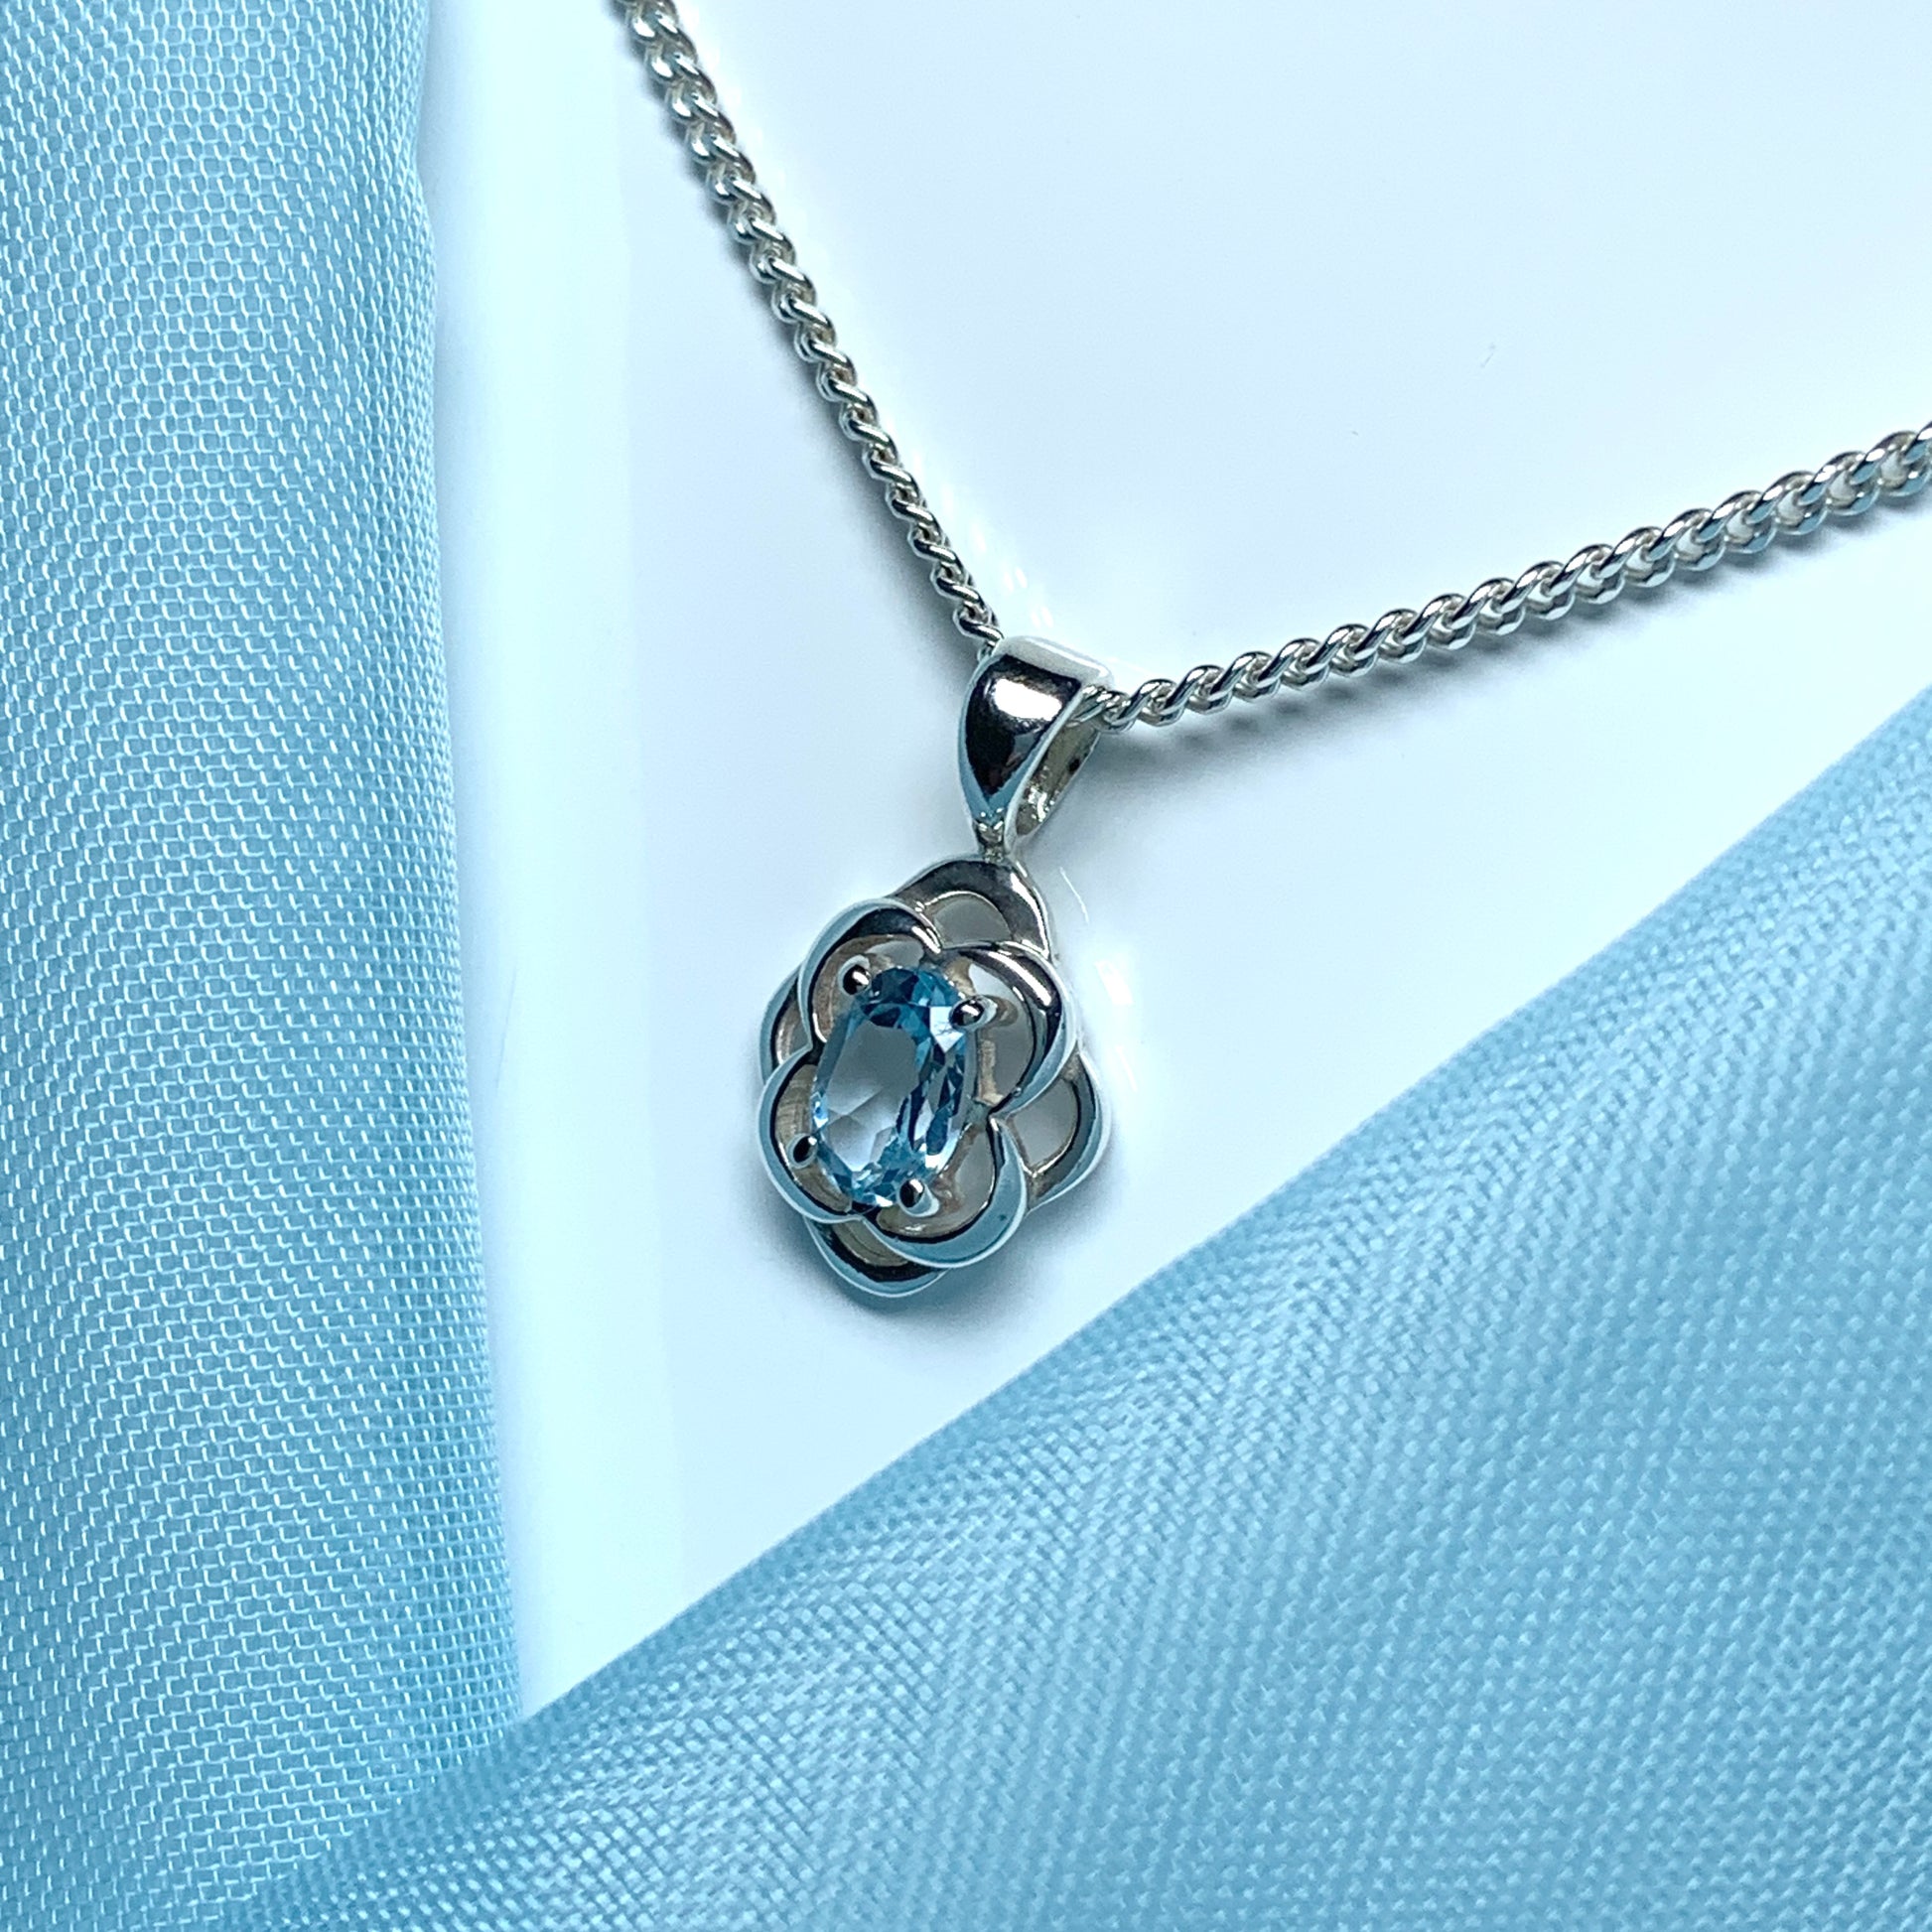 Blue topaz necklace sterling silver pendant Celtic